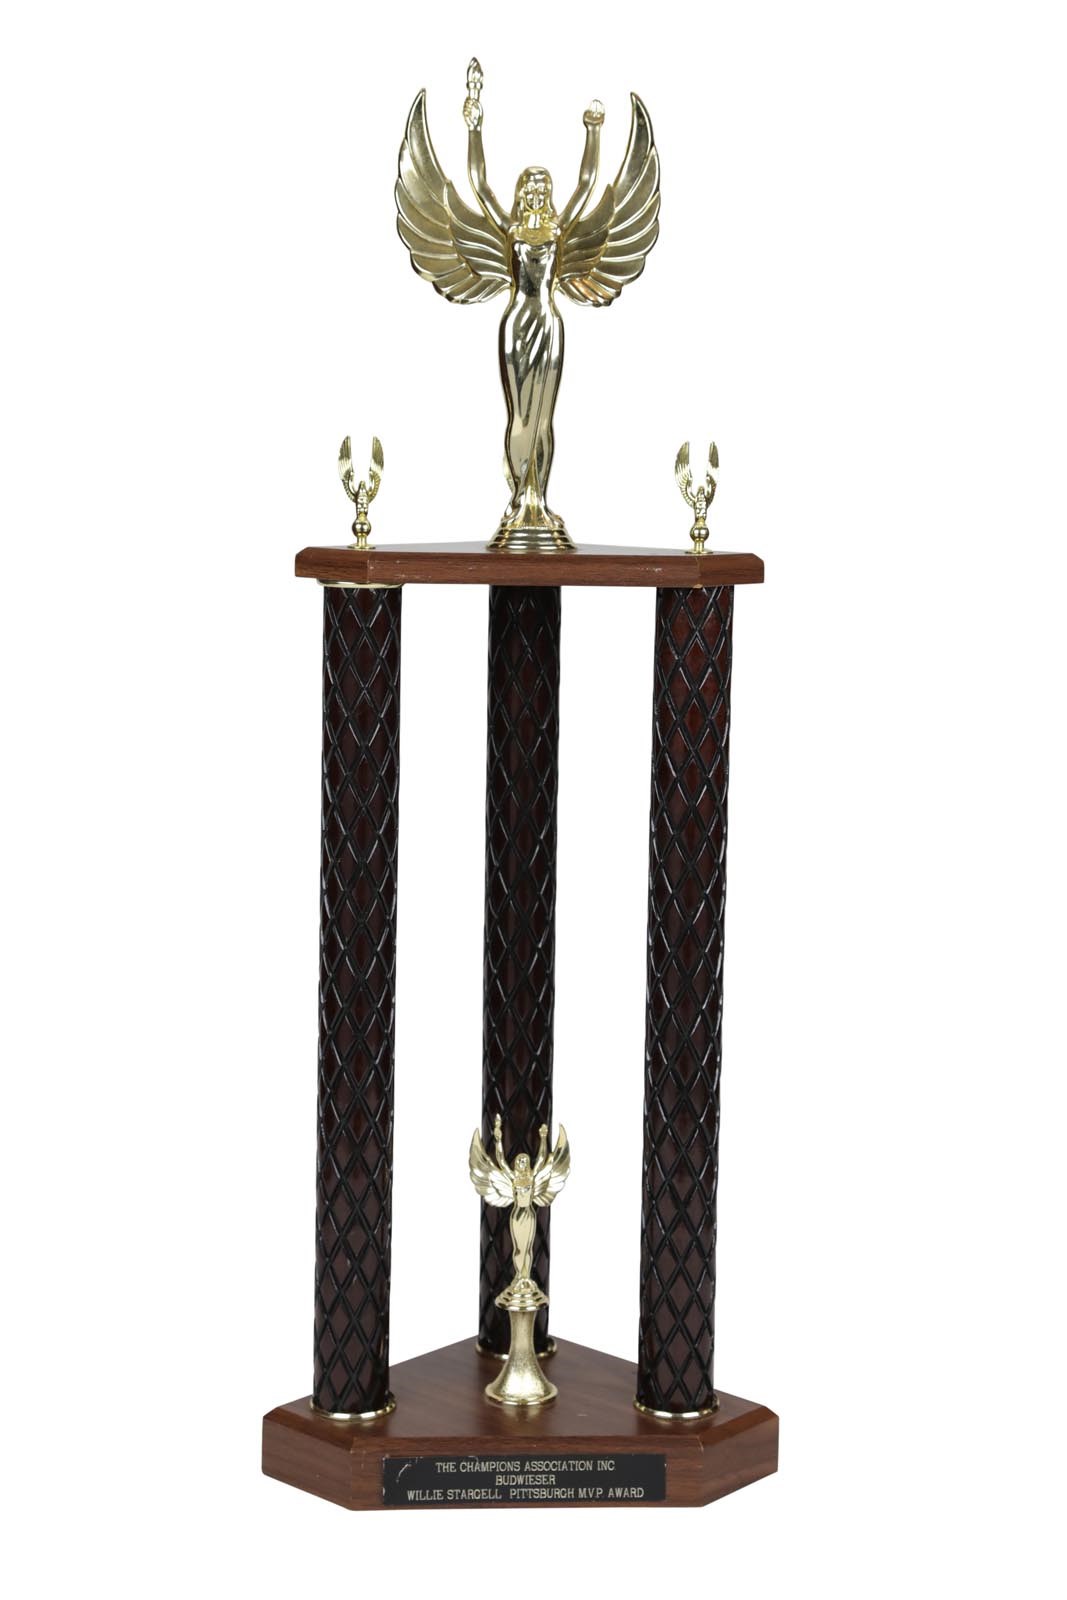 - Willie Stargell MVP Trophy Presented by Budweiser